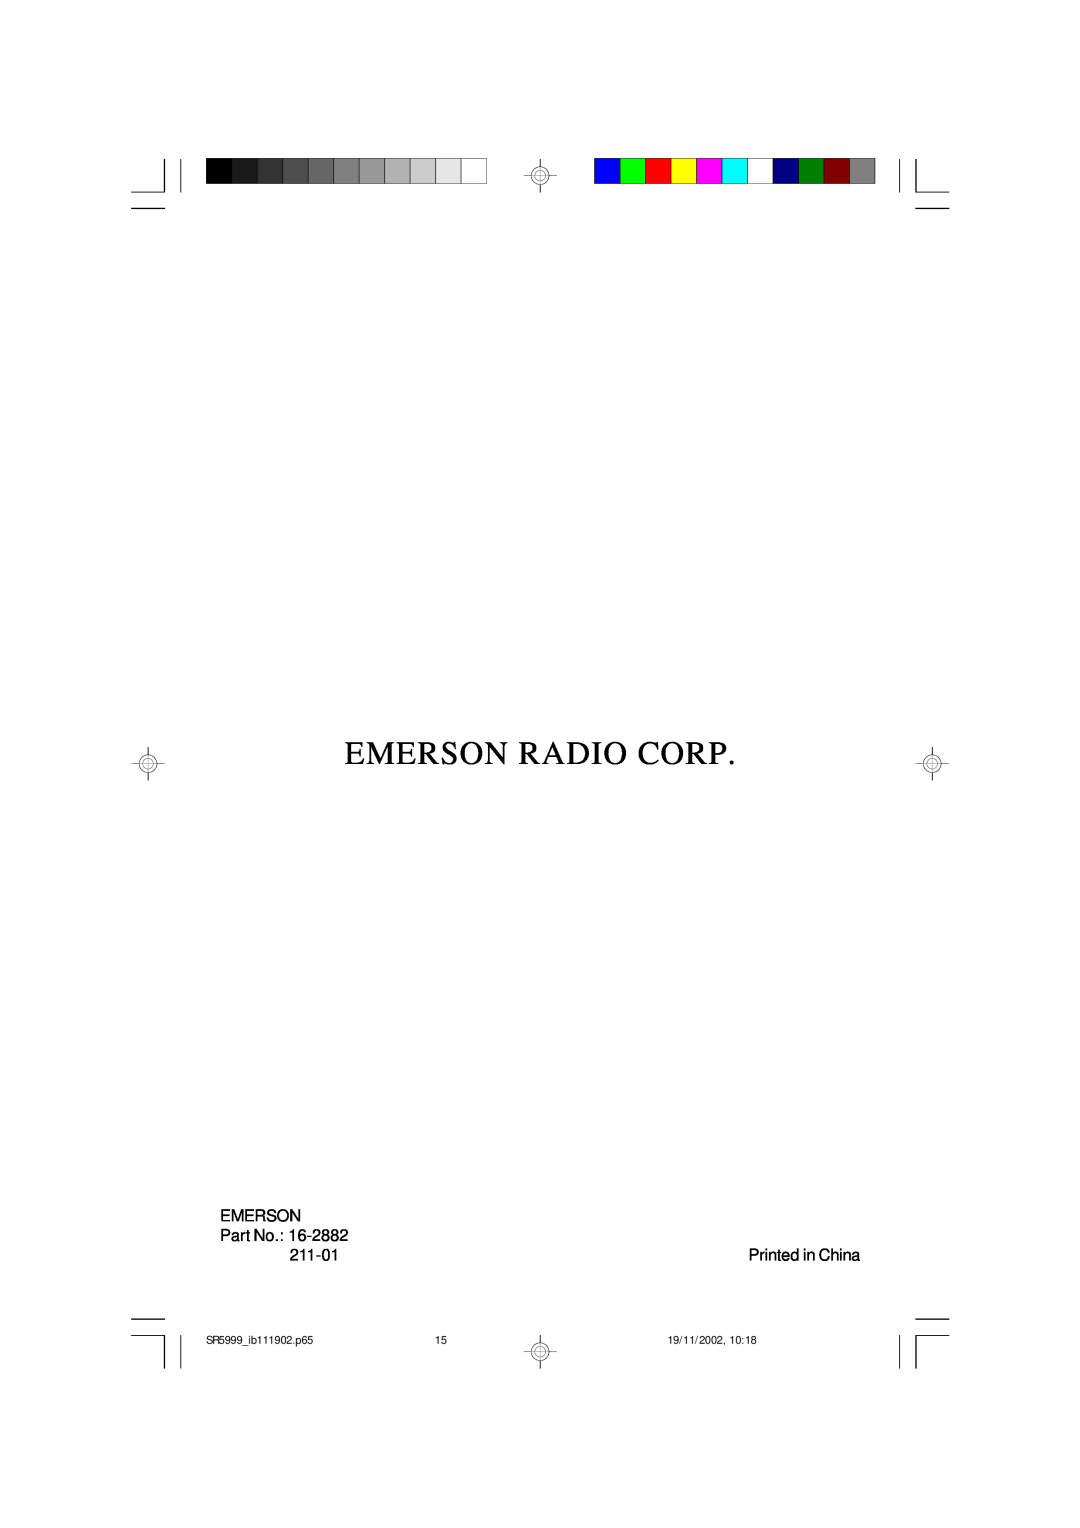 Emerson owner manual Emerson Radio Corp, 211-01, SR5999 ib111902.p65, 19/11/2002 